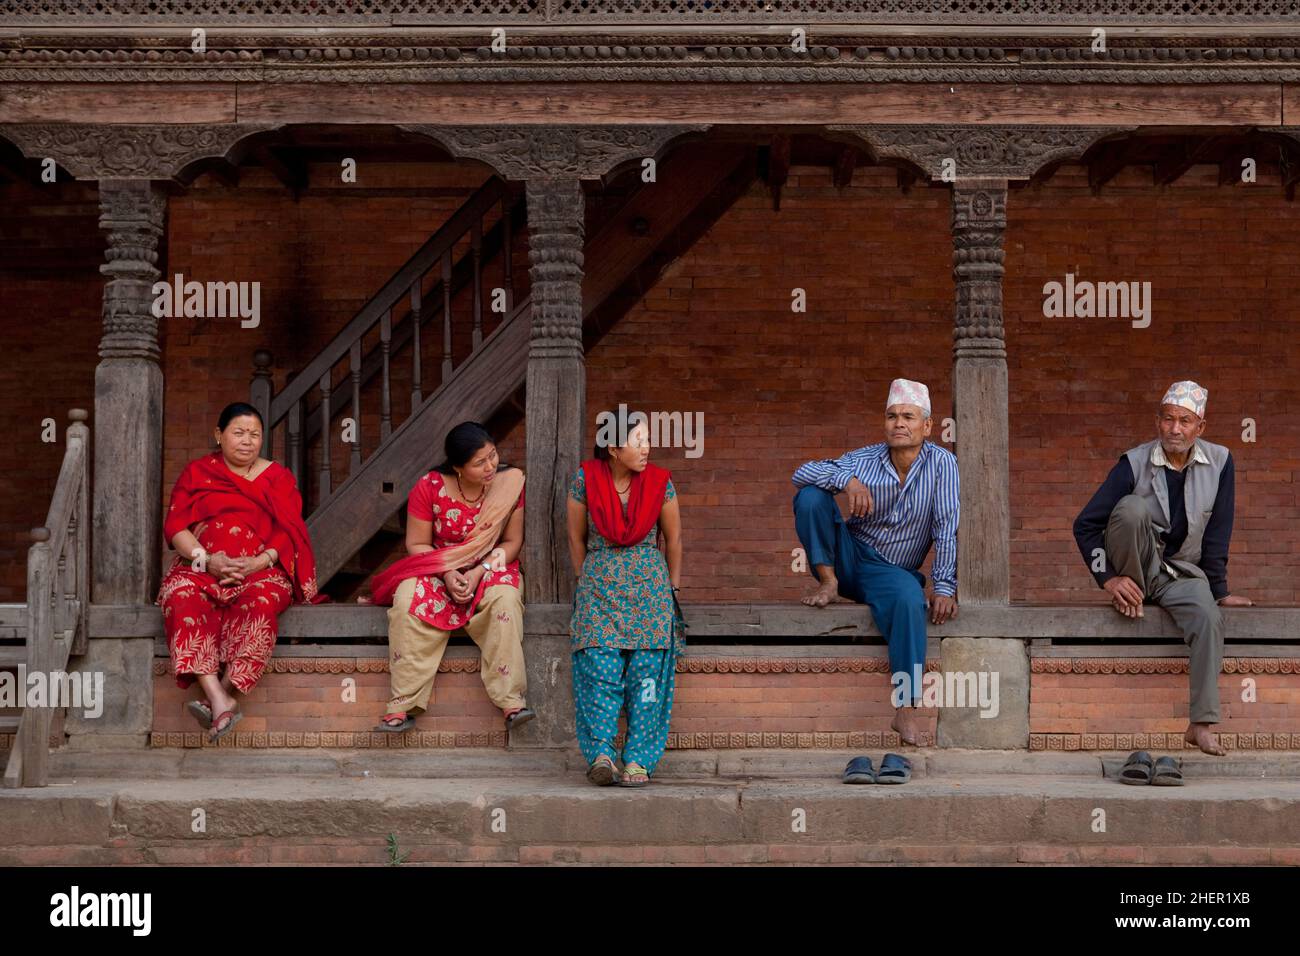 Locals enjoying some down time in Durbar Square, Bhaktapur, during Nepali New Year (Bisket Jatra) festivities. Stock Photo